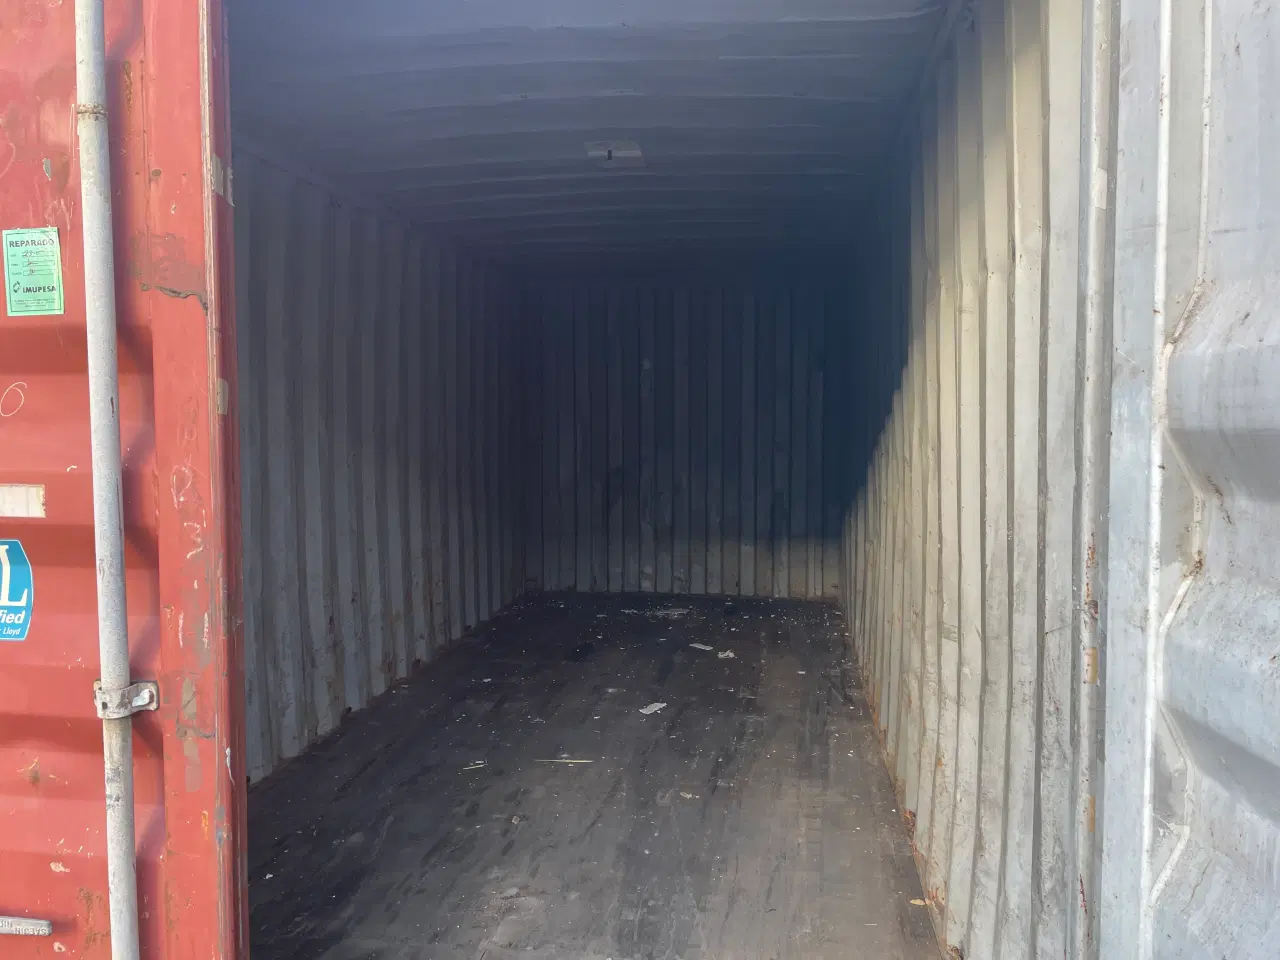 Billede 2 - 20 fods Container - ID: TGHU 388729-9